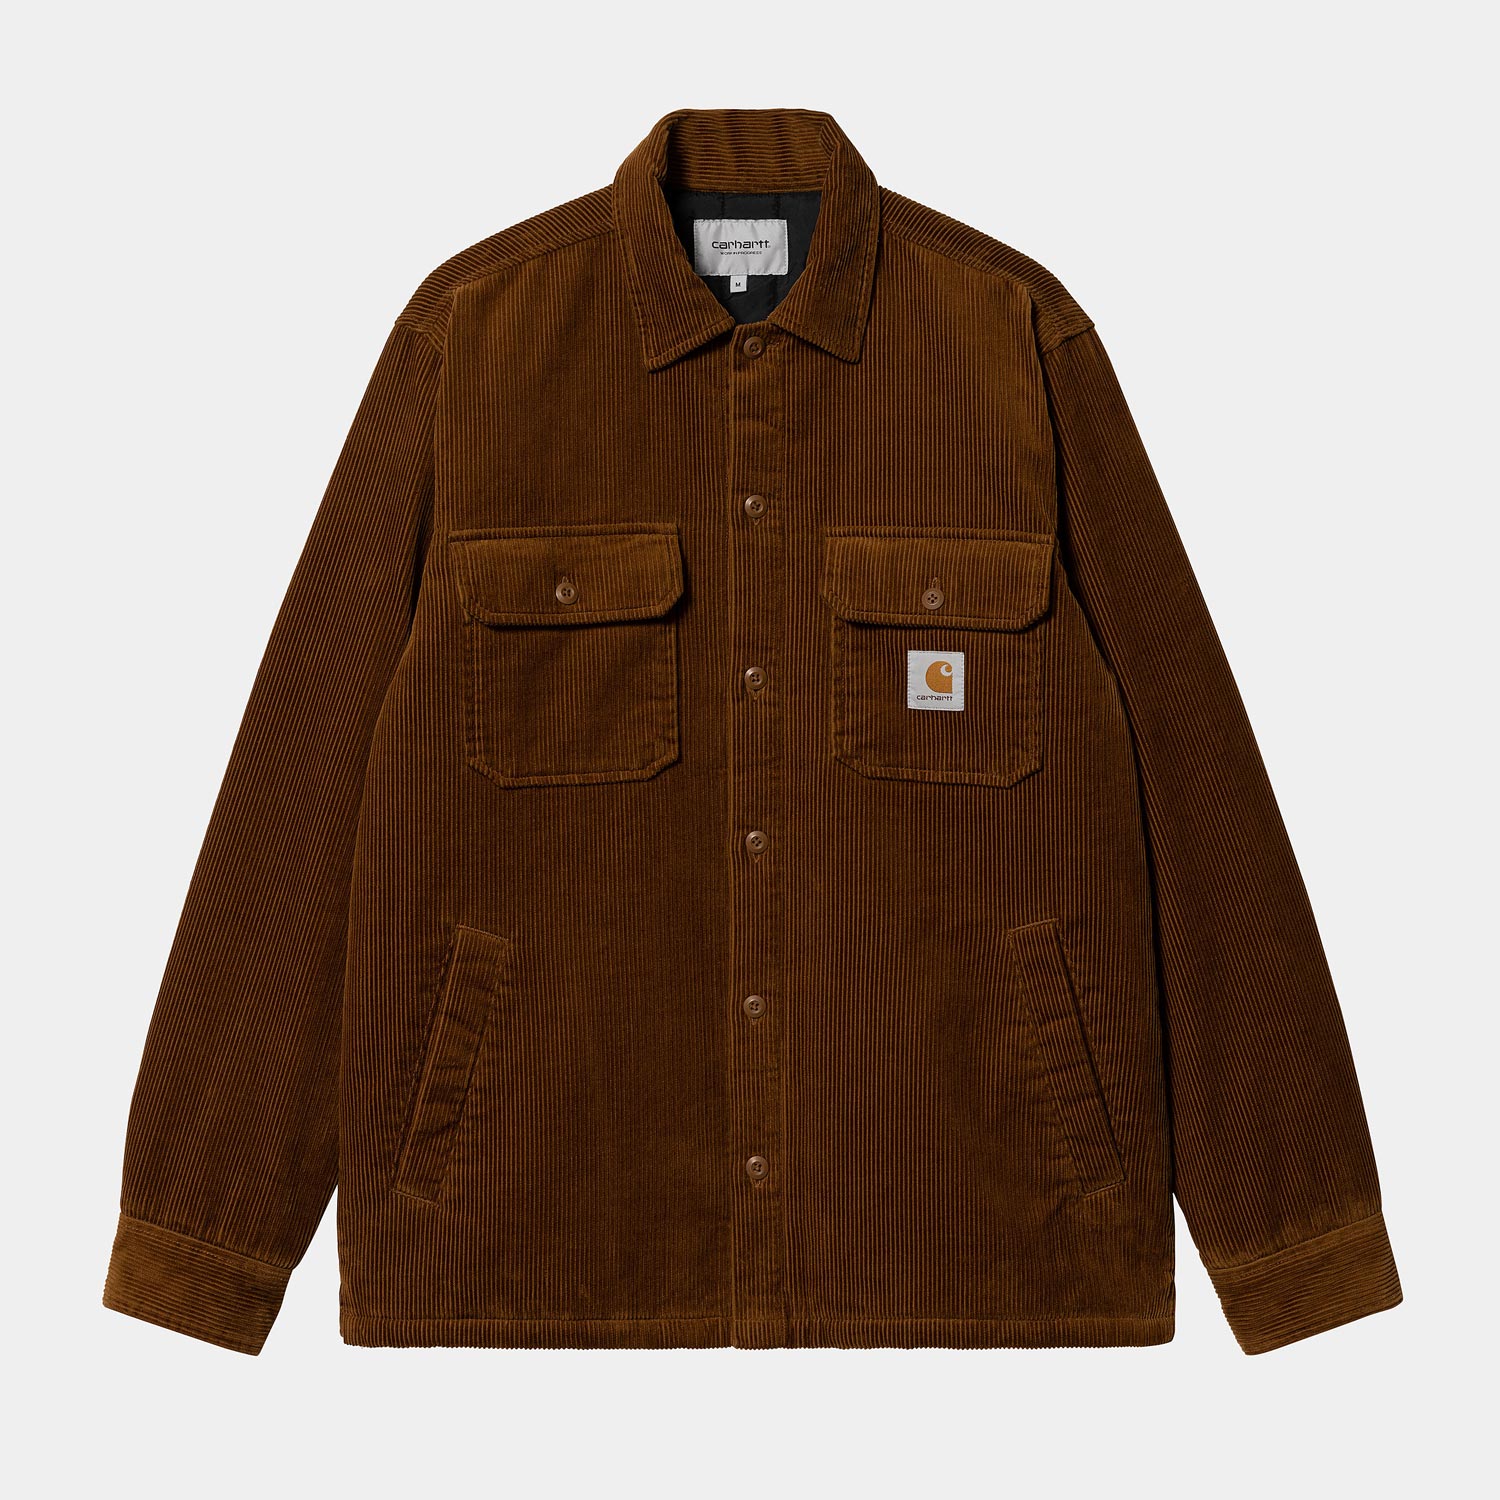 Carhartt WIP Whitsome Loose Fit Shirt Jacket - Deep Hamilton Brown